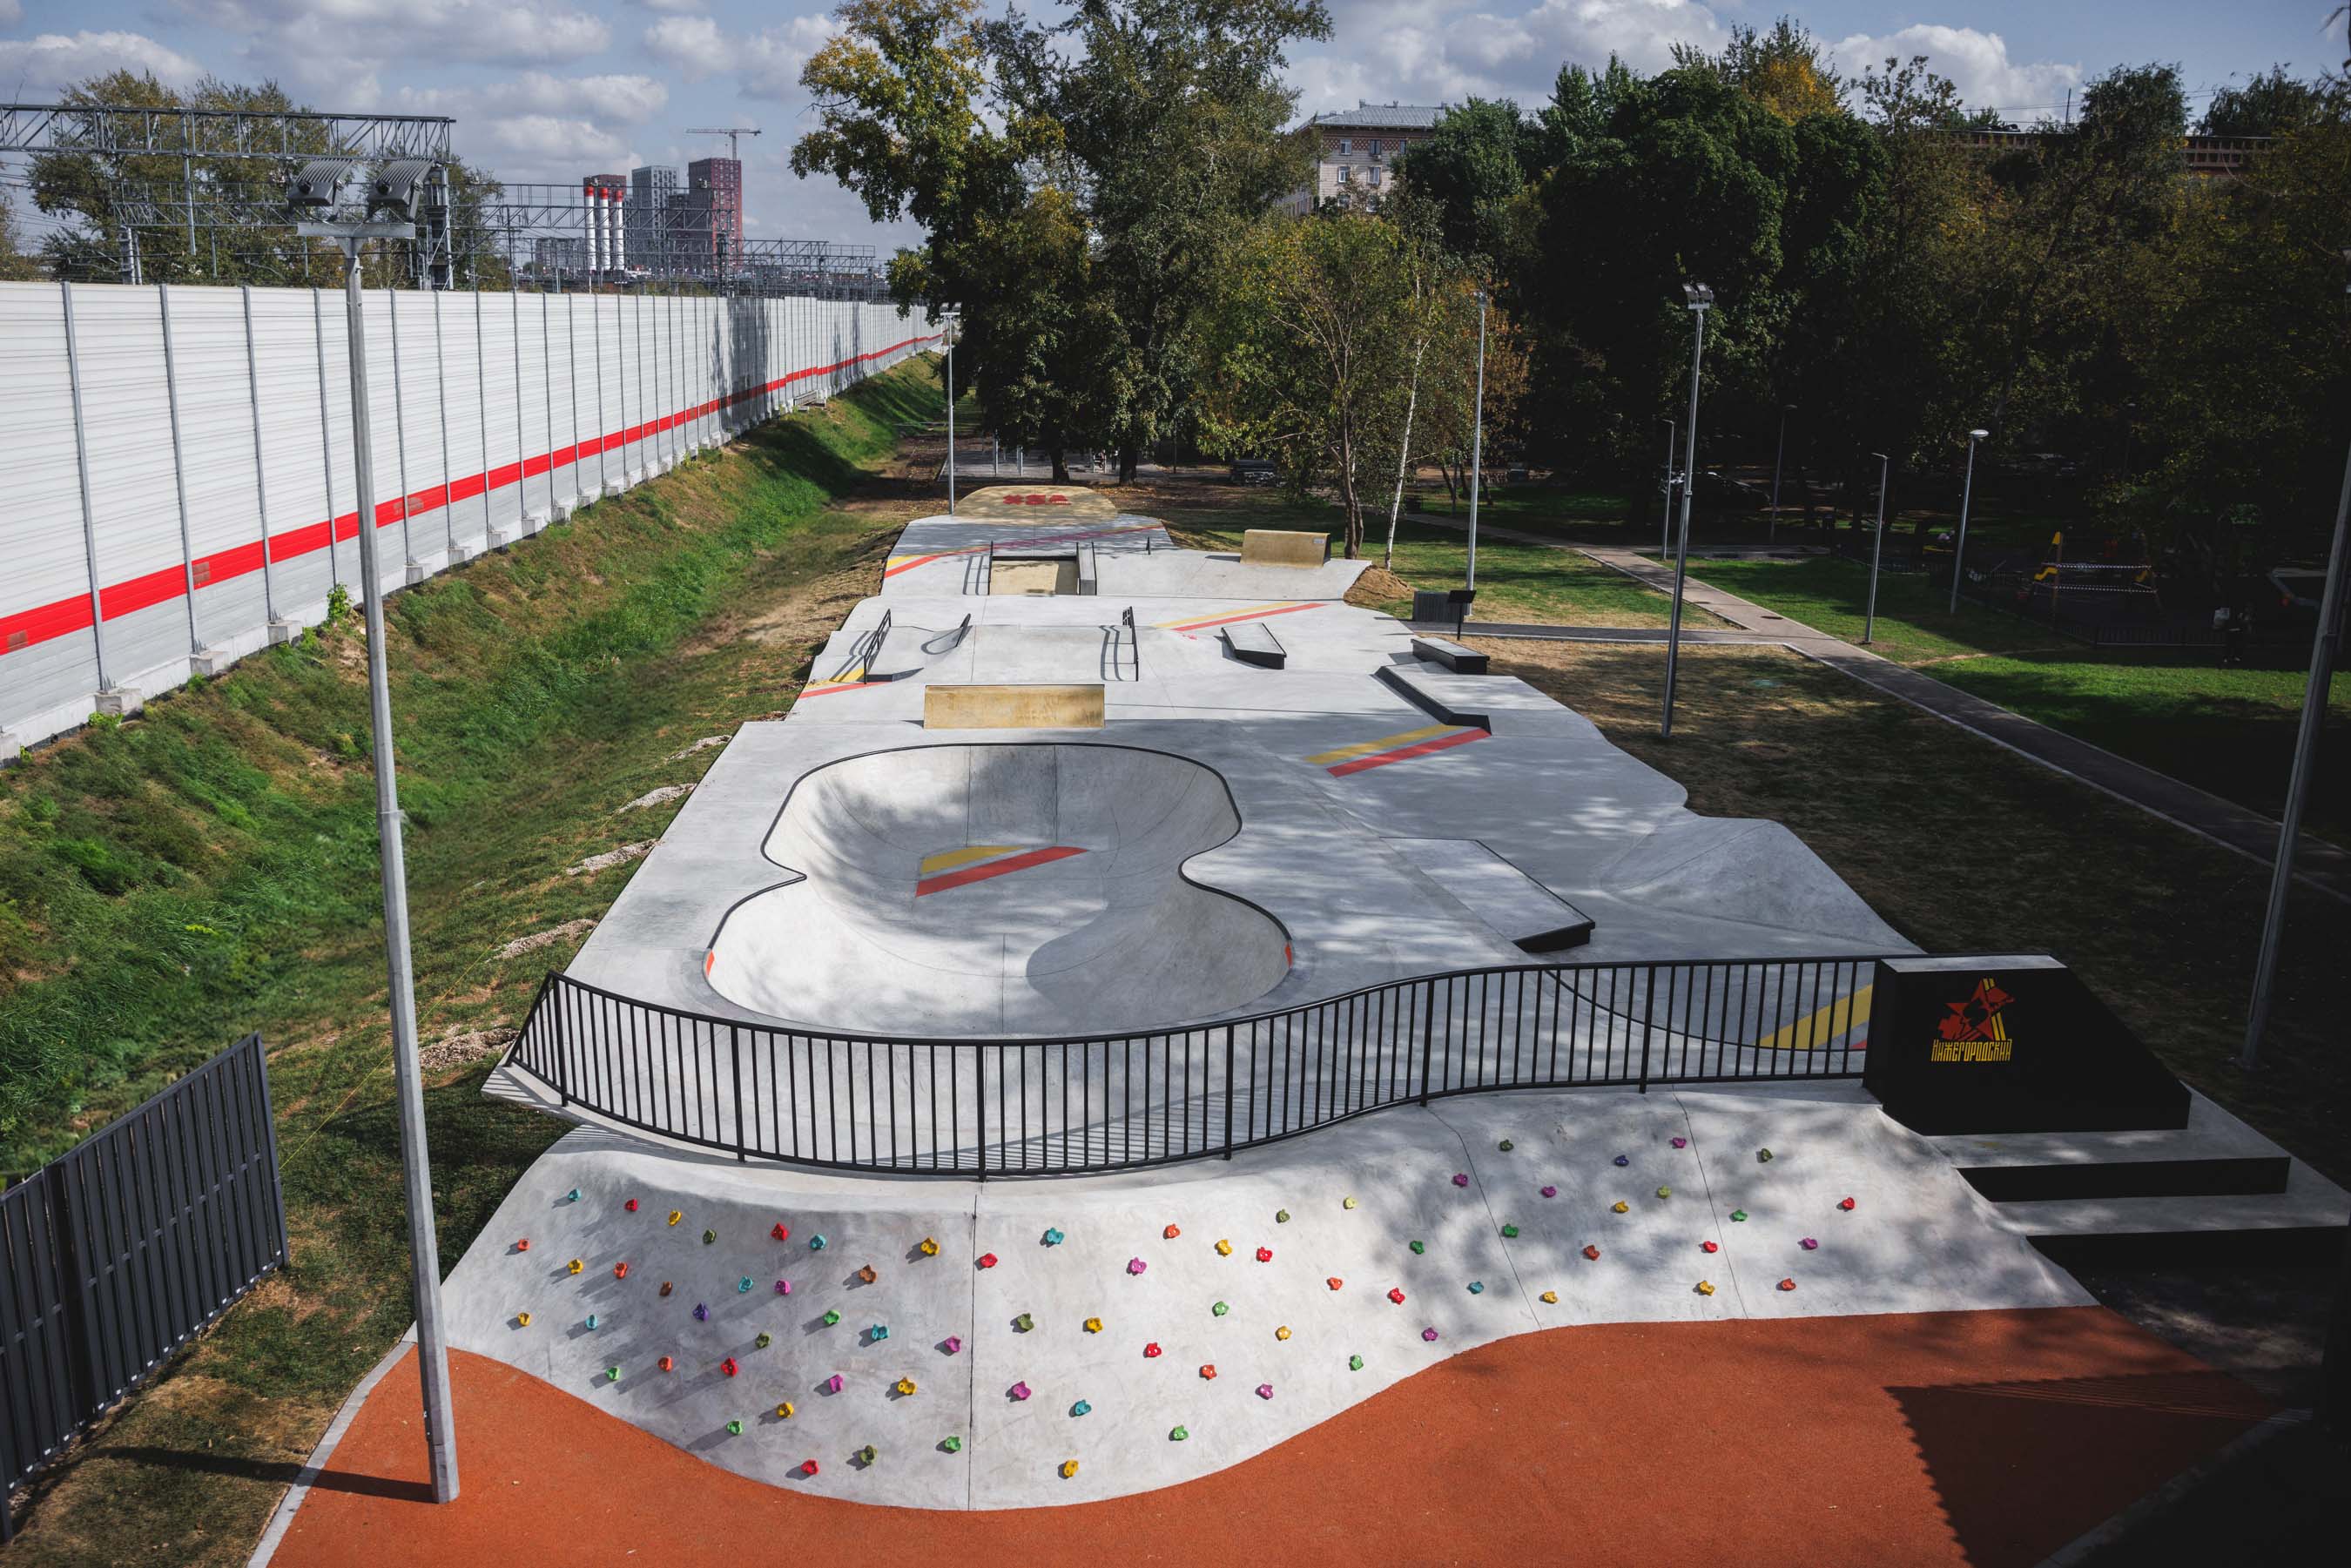 Nizhegorodsky skatepark